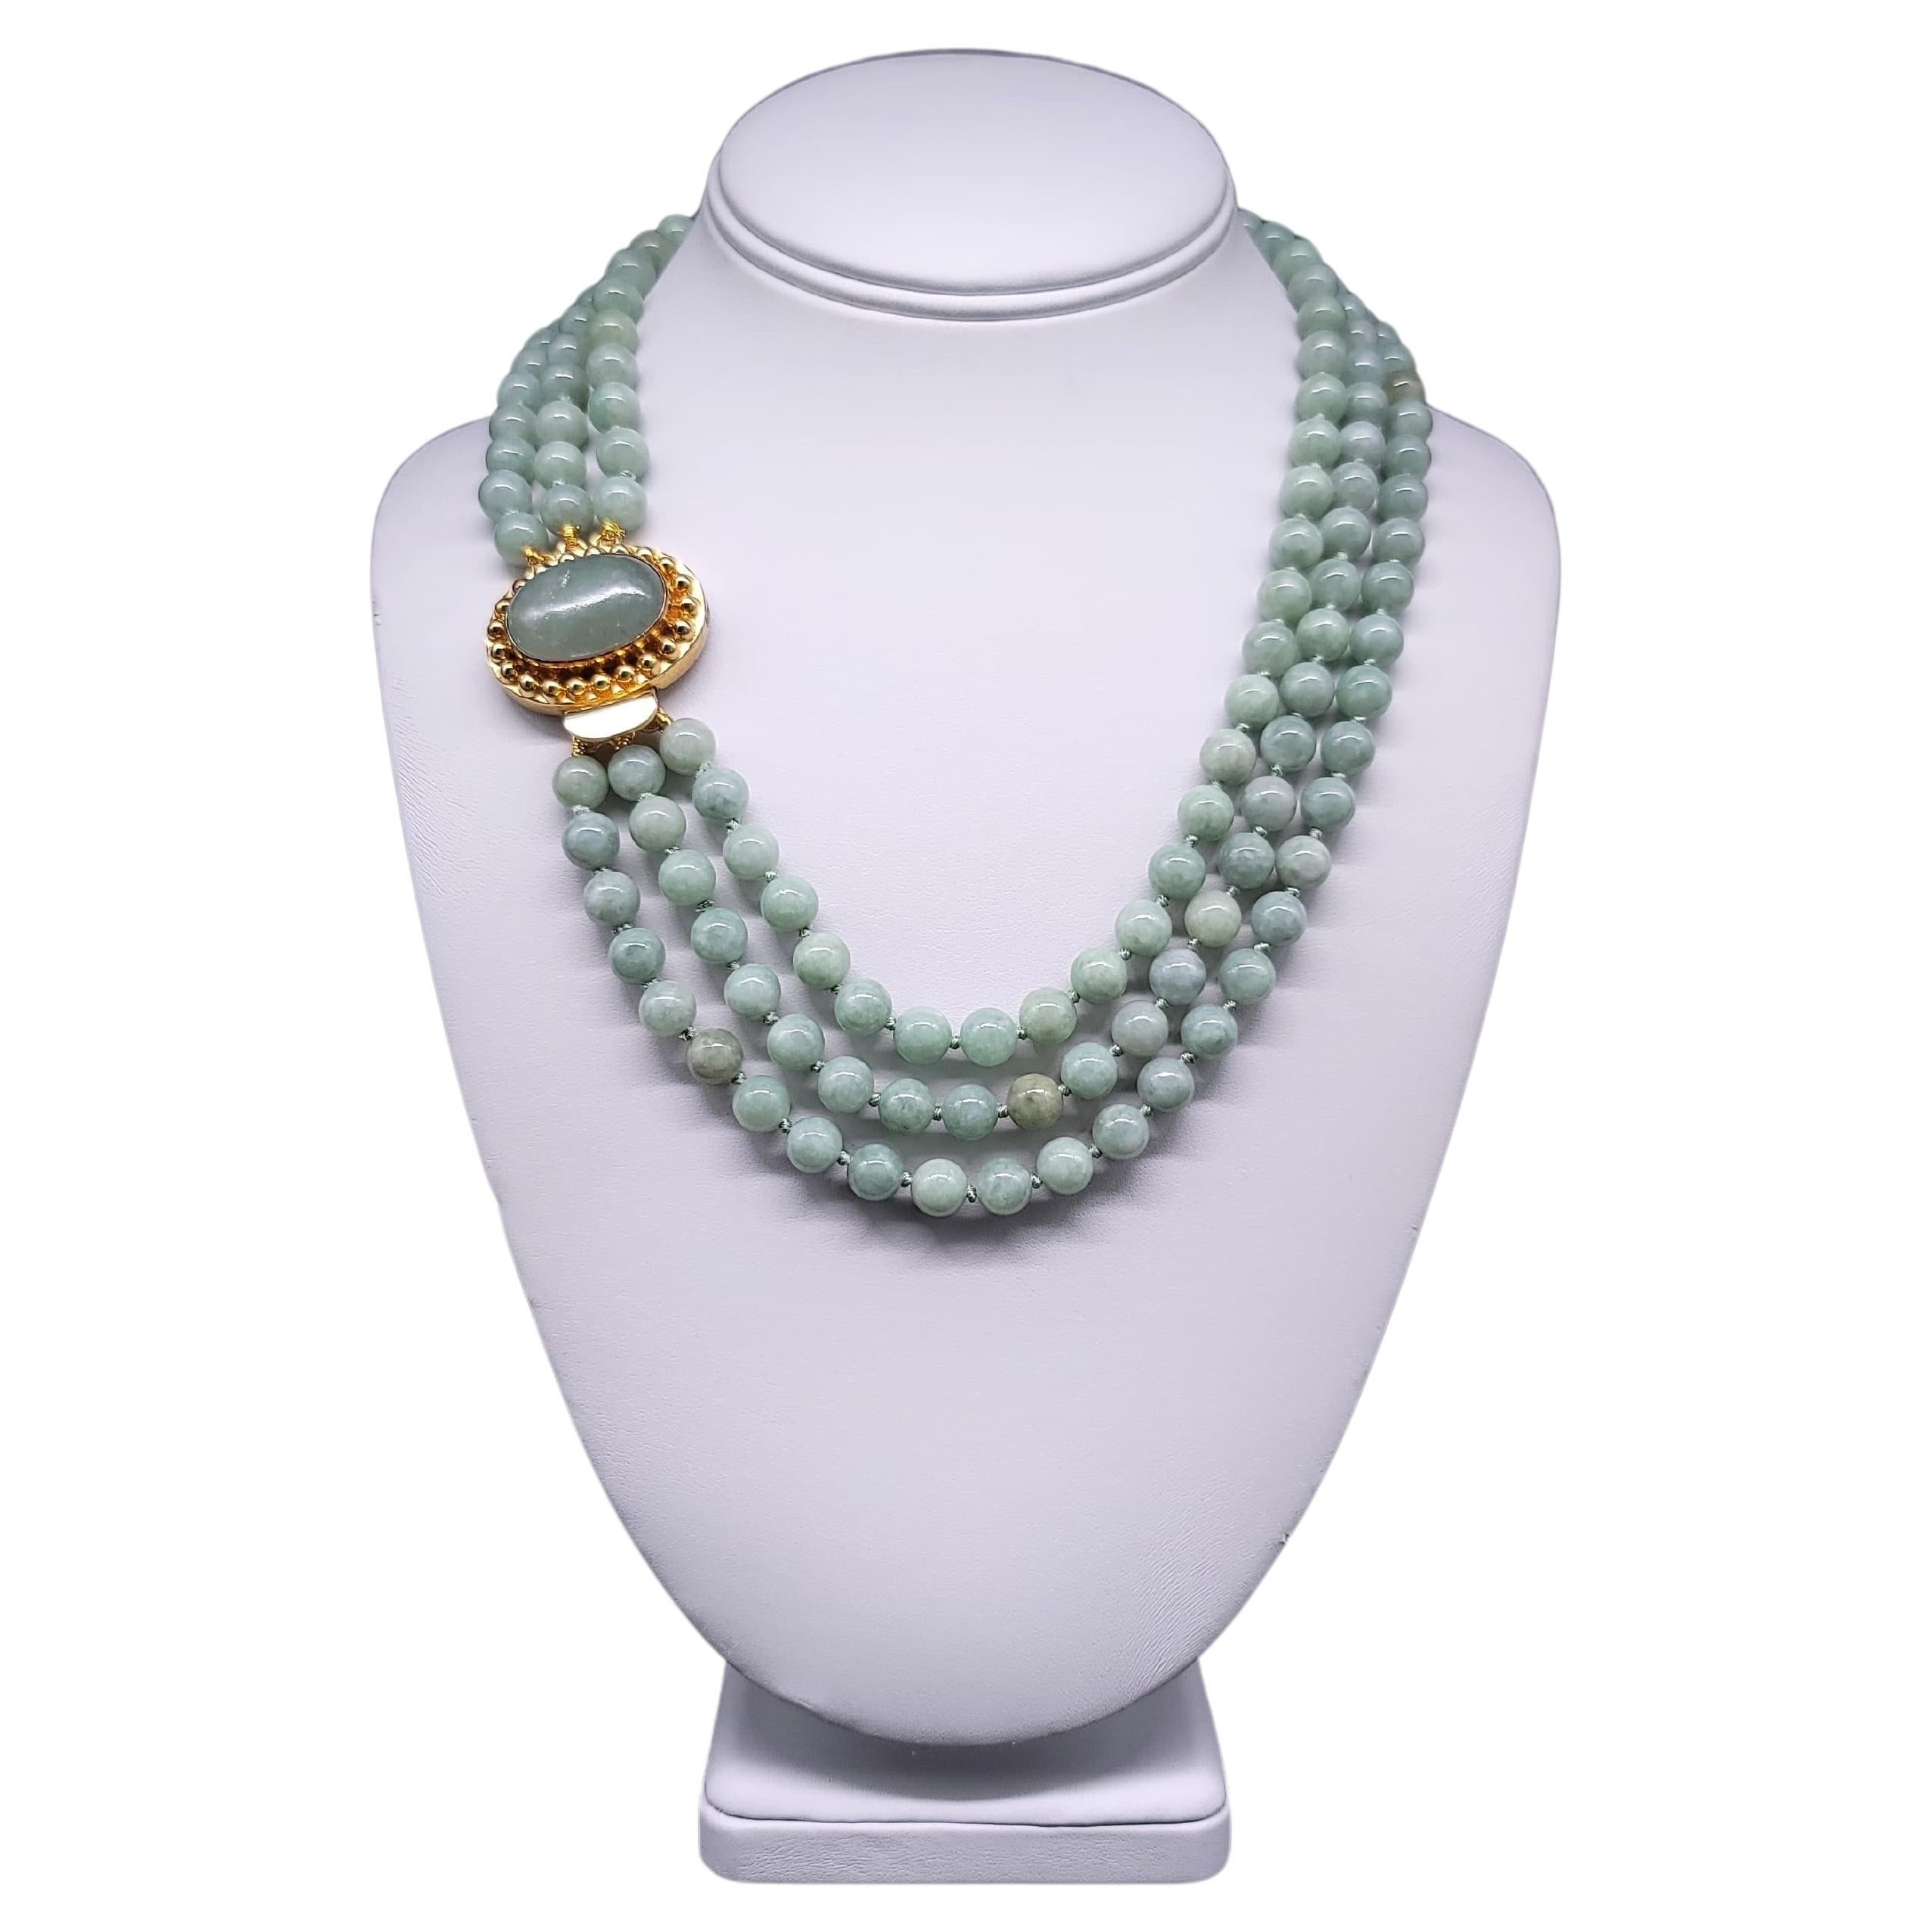 A.Jeschel Exquisite Natural Burmese Jade signature clasp necklace.